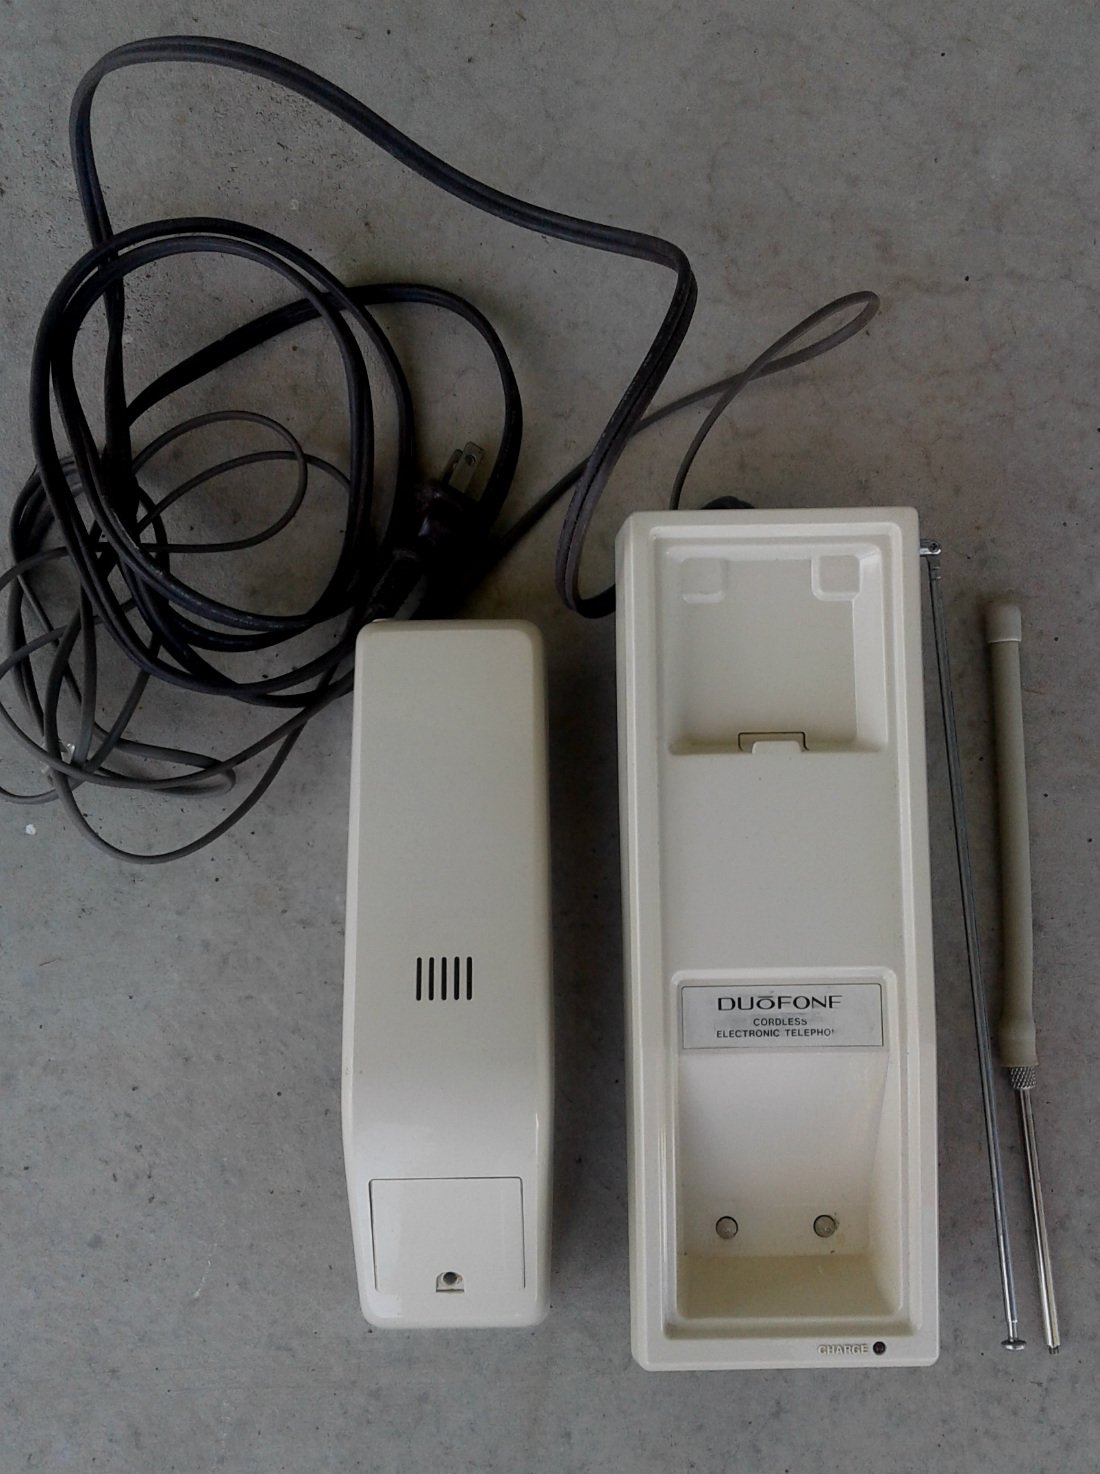 Vtg Radio Shack Cordless Telephone DuoFone 43-544 w/ Antenna, Vintage 80s Desk/Wall Base Handset